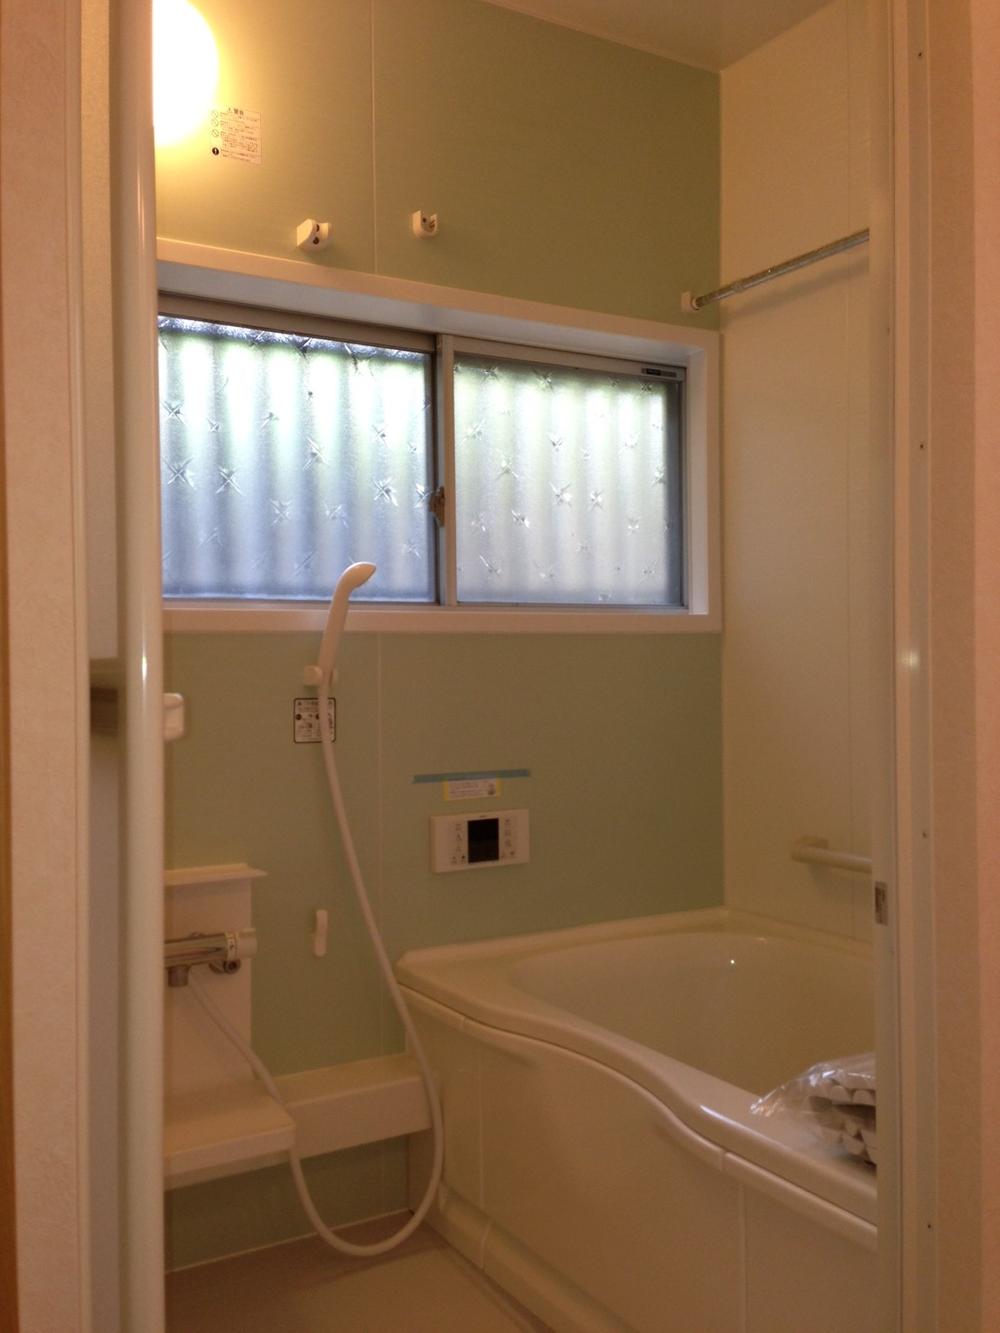 Bathroom. Indoor (October 2012) with photographing unit replacement "bathroom dryer)